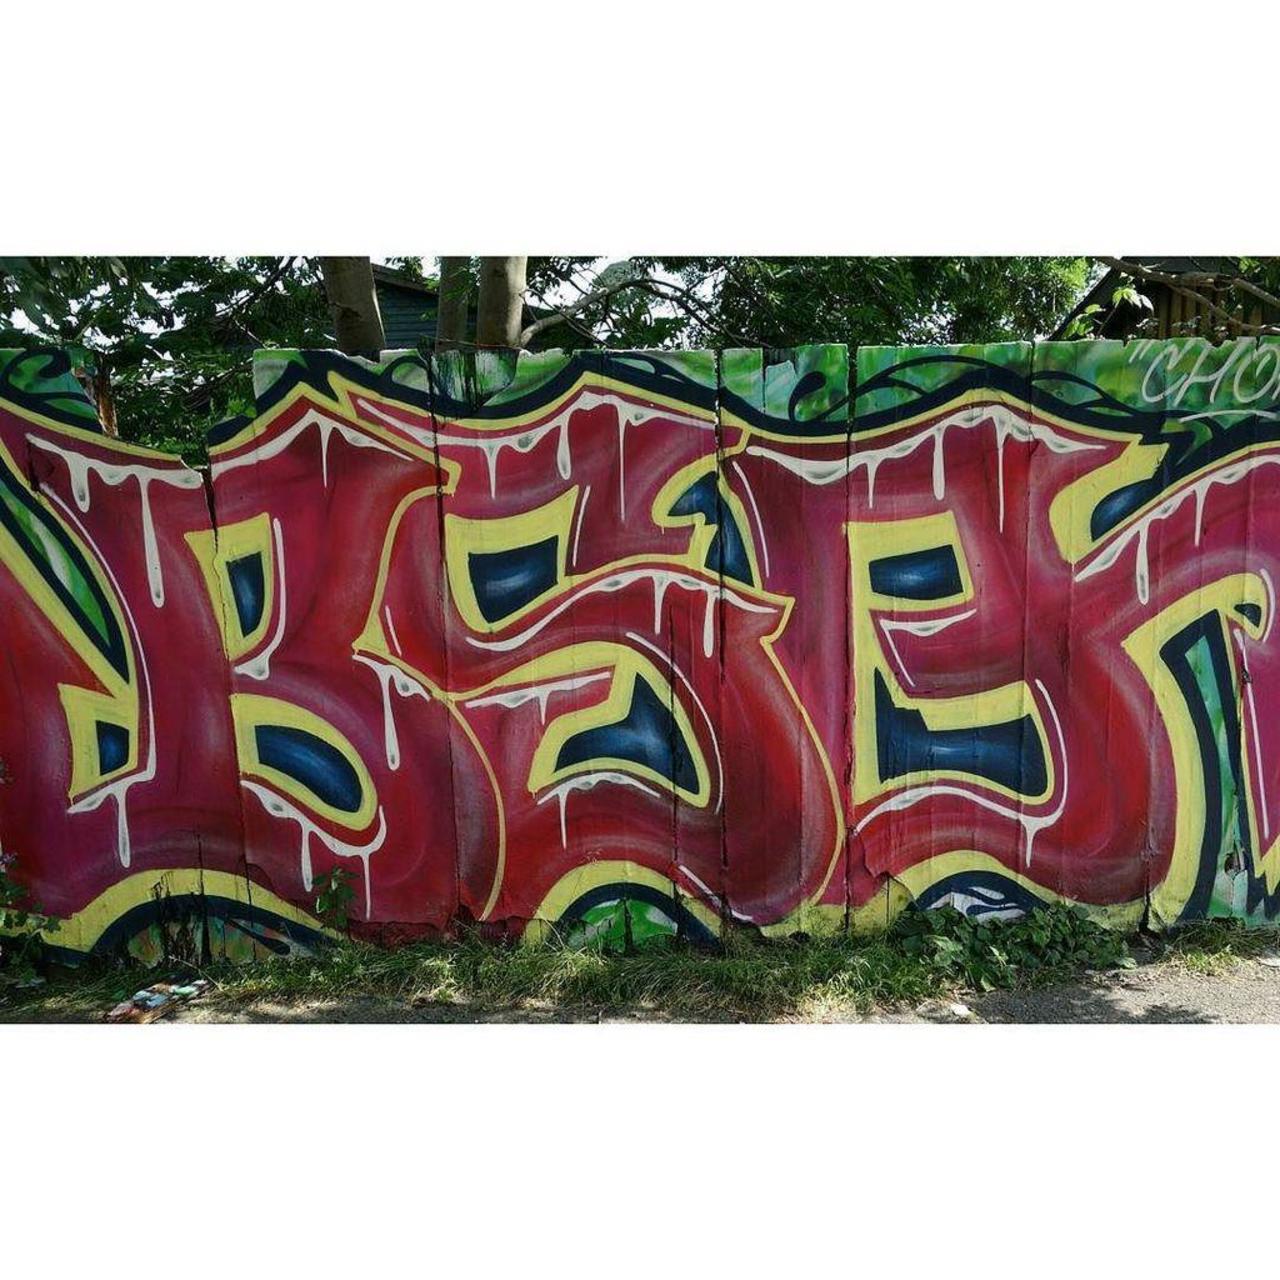 RT @artpushr: via #bombingtheworld "http://ift.tt/1GcGNhk" #graffiti #streetart http://t.co/z6G7nQGvZR